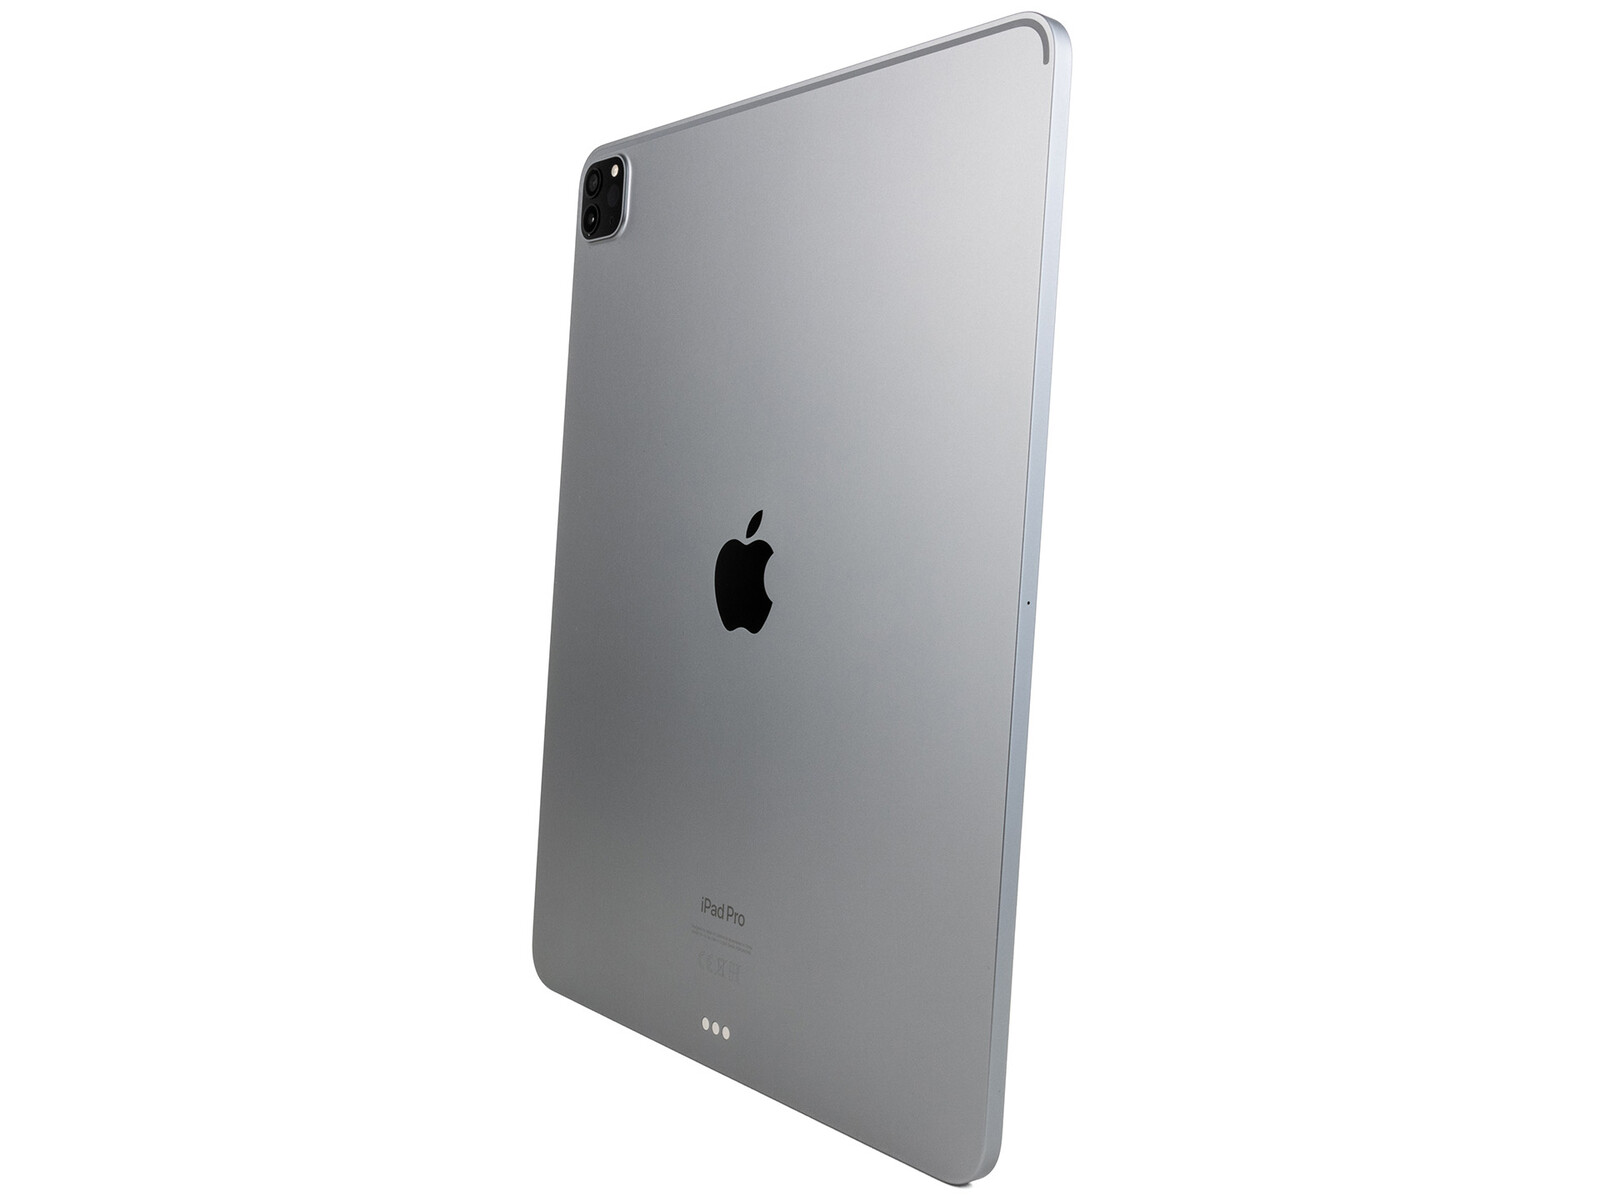 New iPad Pro says 'iPad Pro' on the back